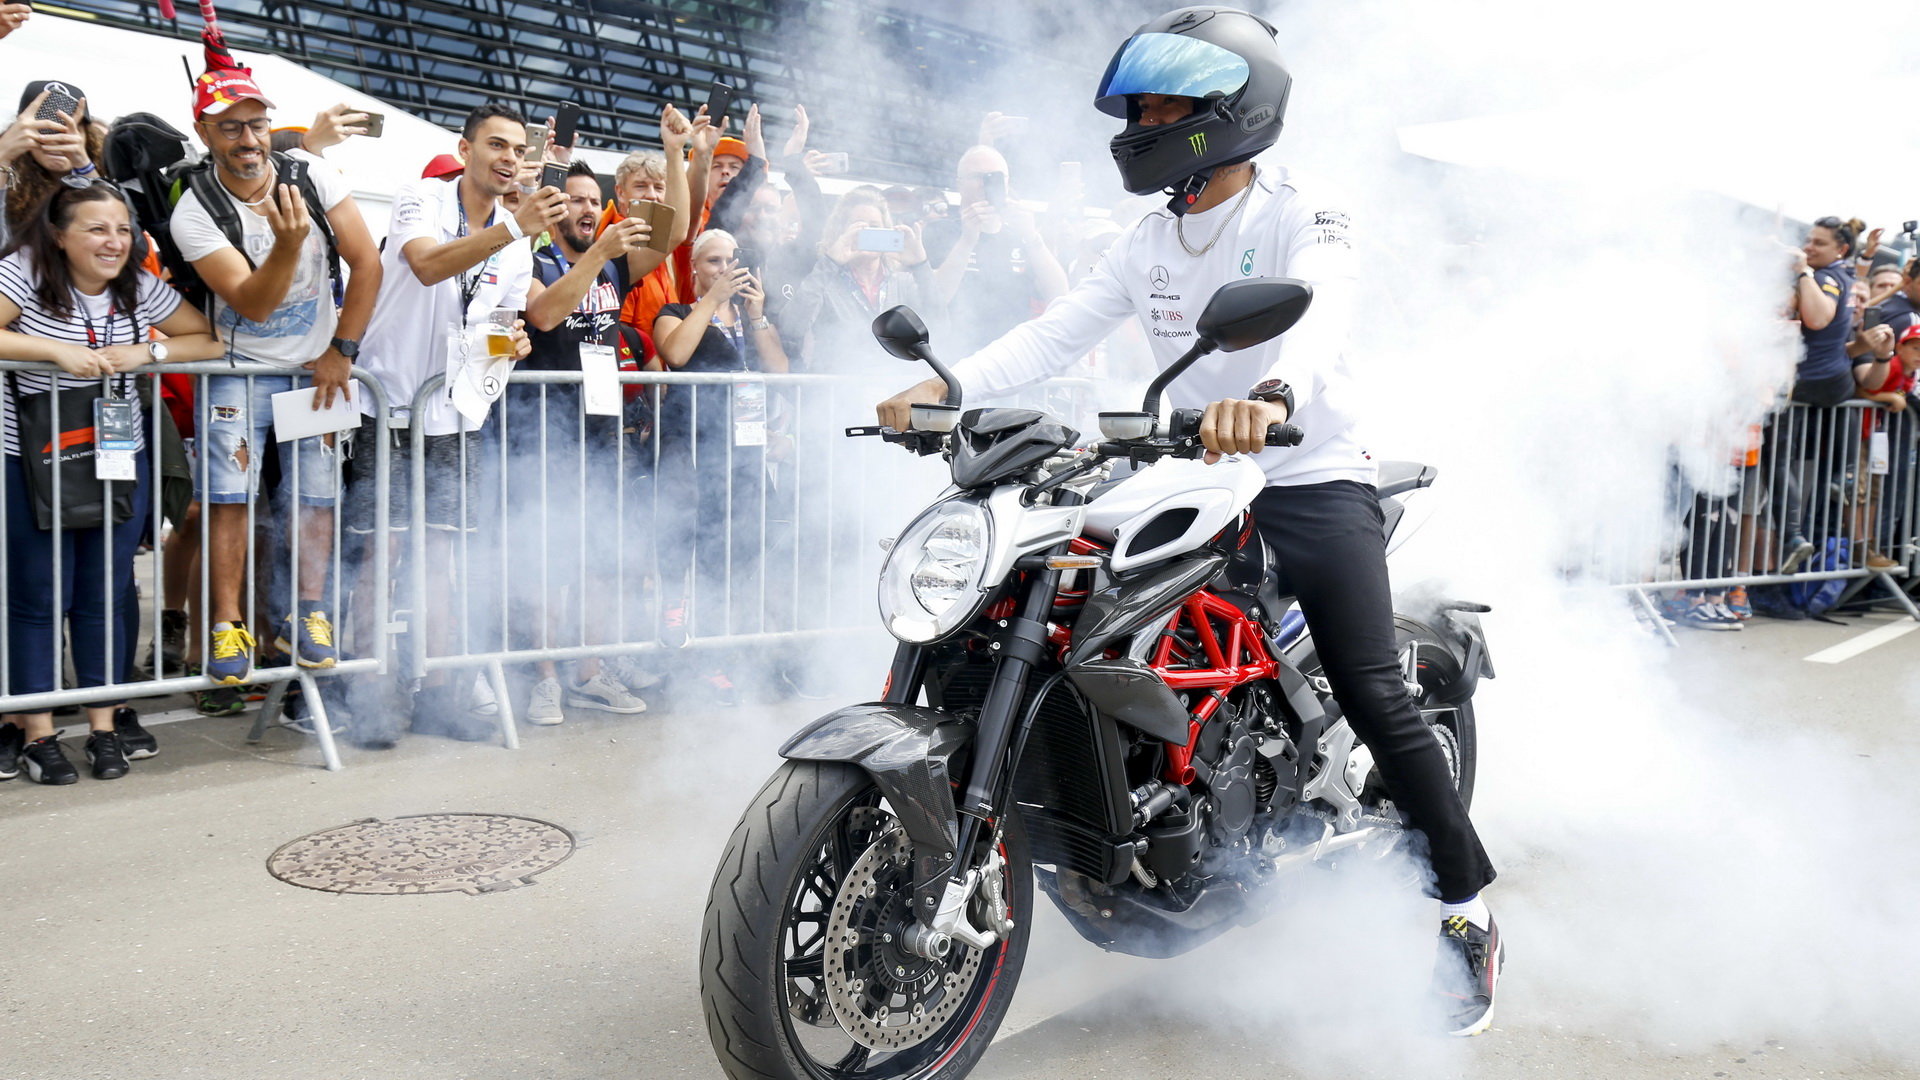 Lewis Hamilton přijel na motorce na okruh v Rakousku